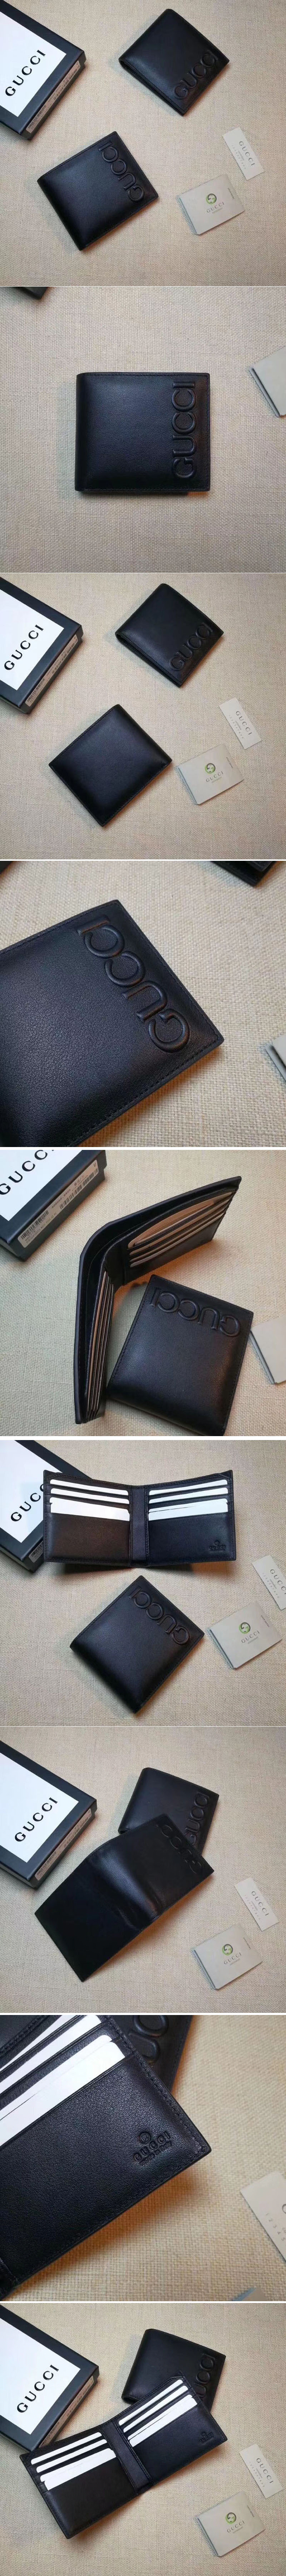 Replica Gucci 428767 GG Marmont leather bi-fold wallet Black